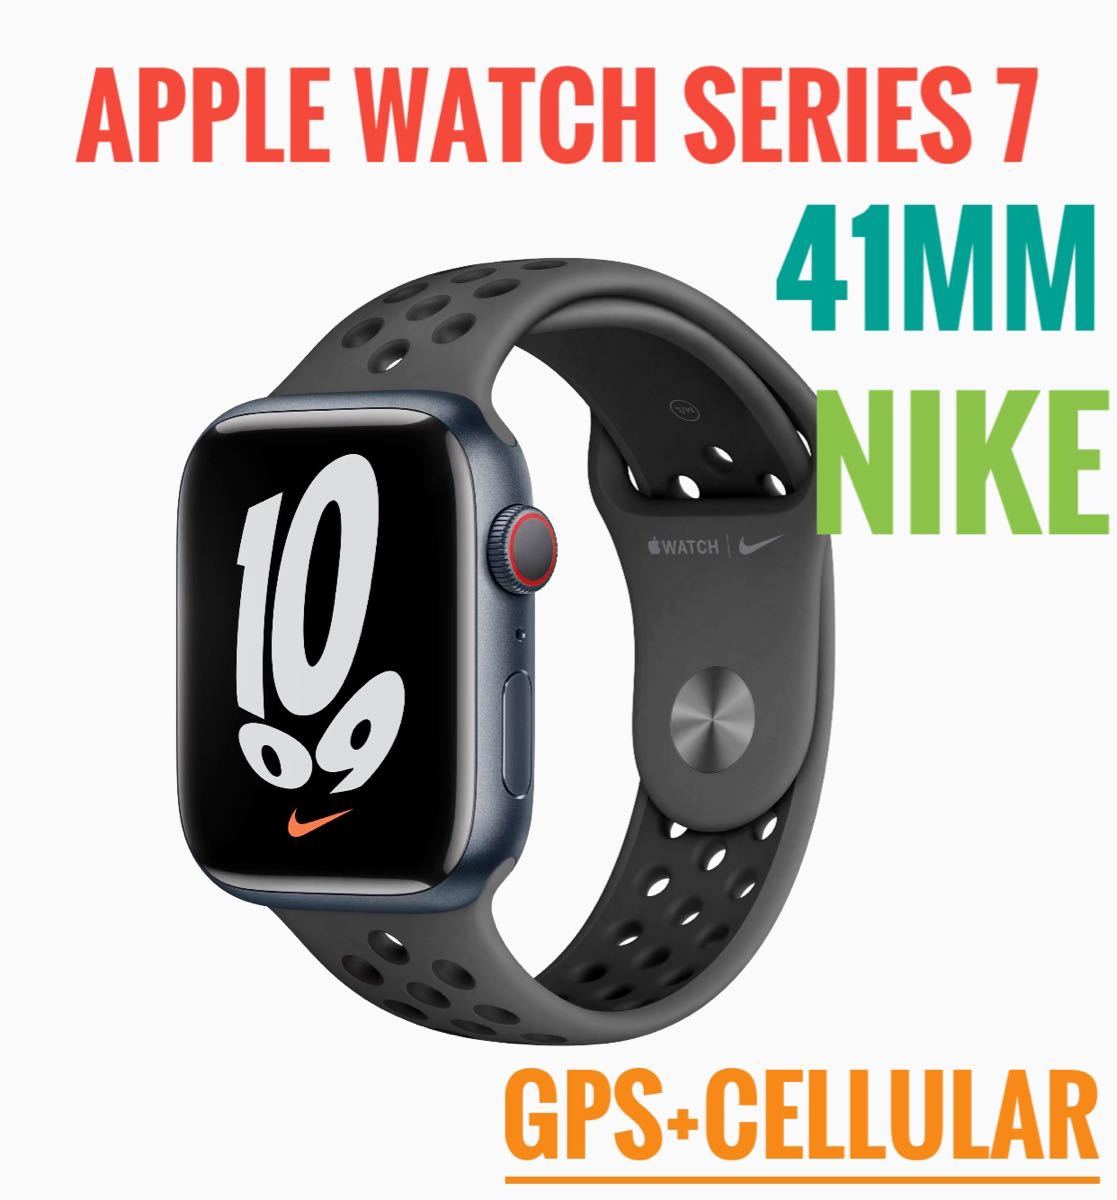 Apple Watch Series 7 41mm黒 GPS+セルラー新品未開封 - adc-apteka.com.ua